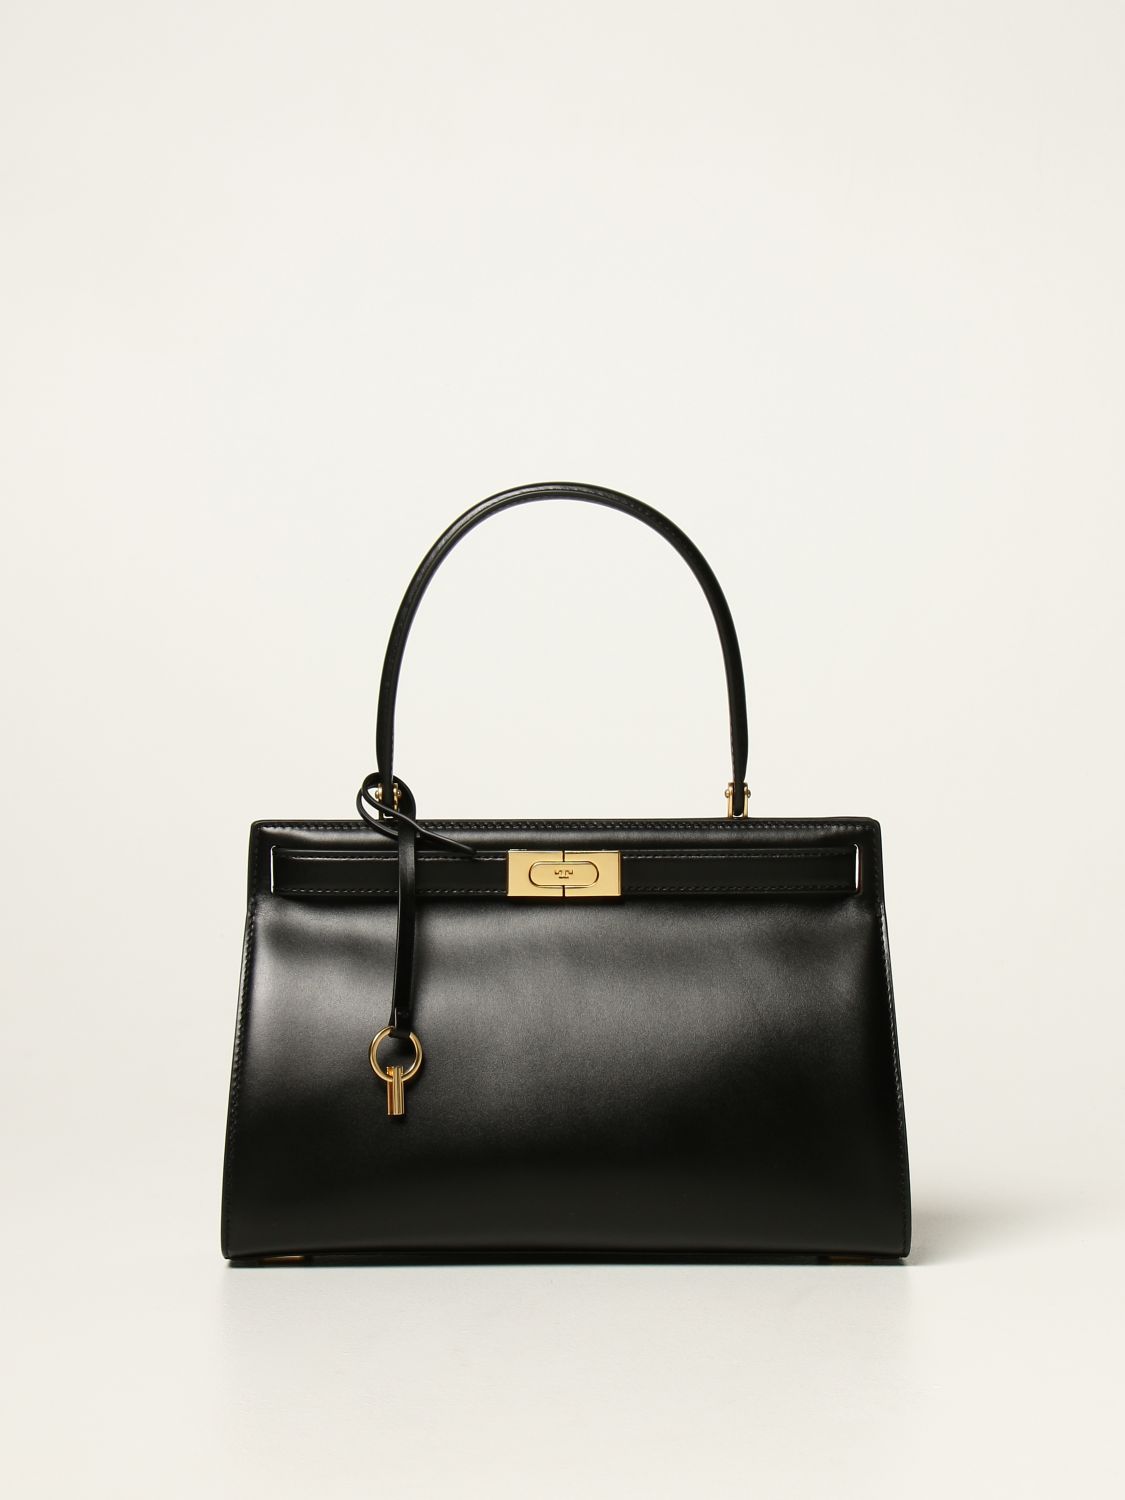 TORY BURCH: Lee bag in smooth leather - Black | Tory Burch handbag 55814  online on 